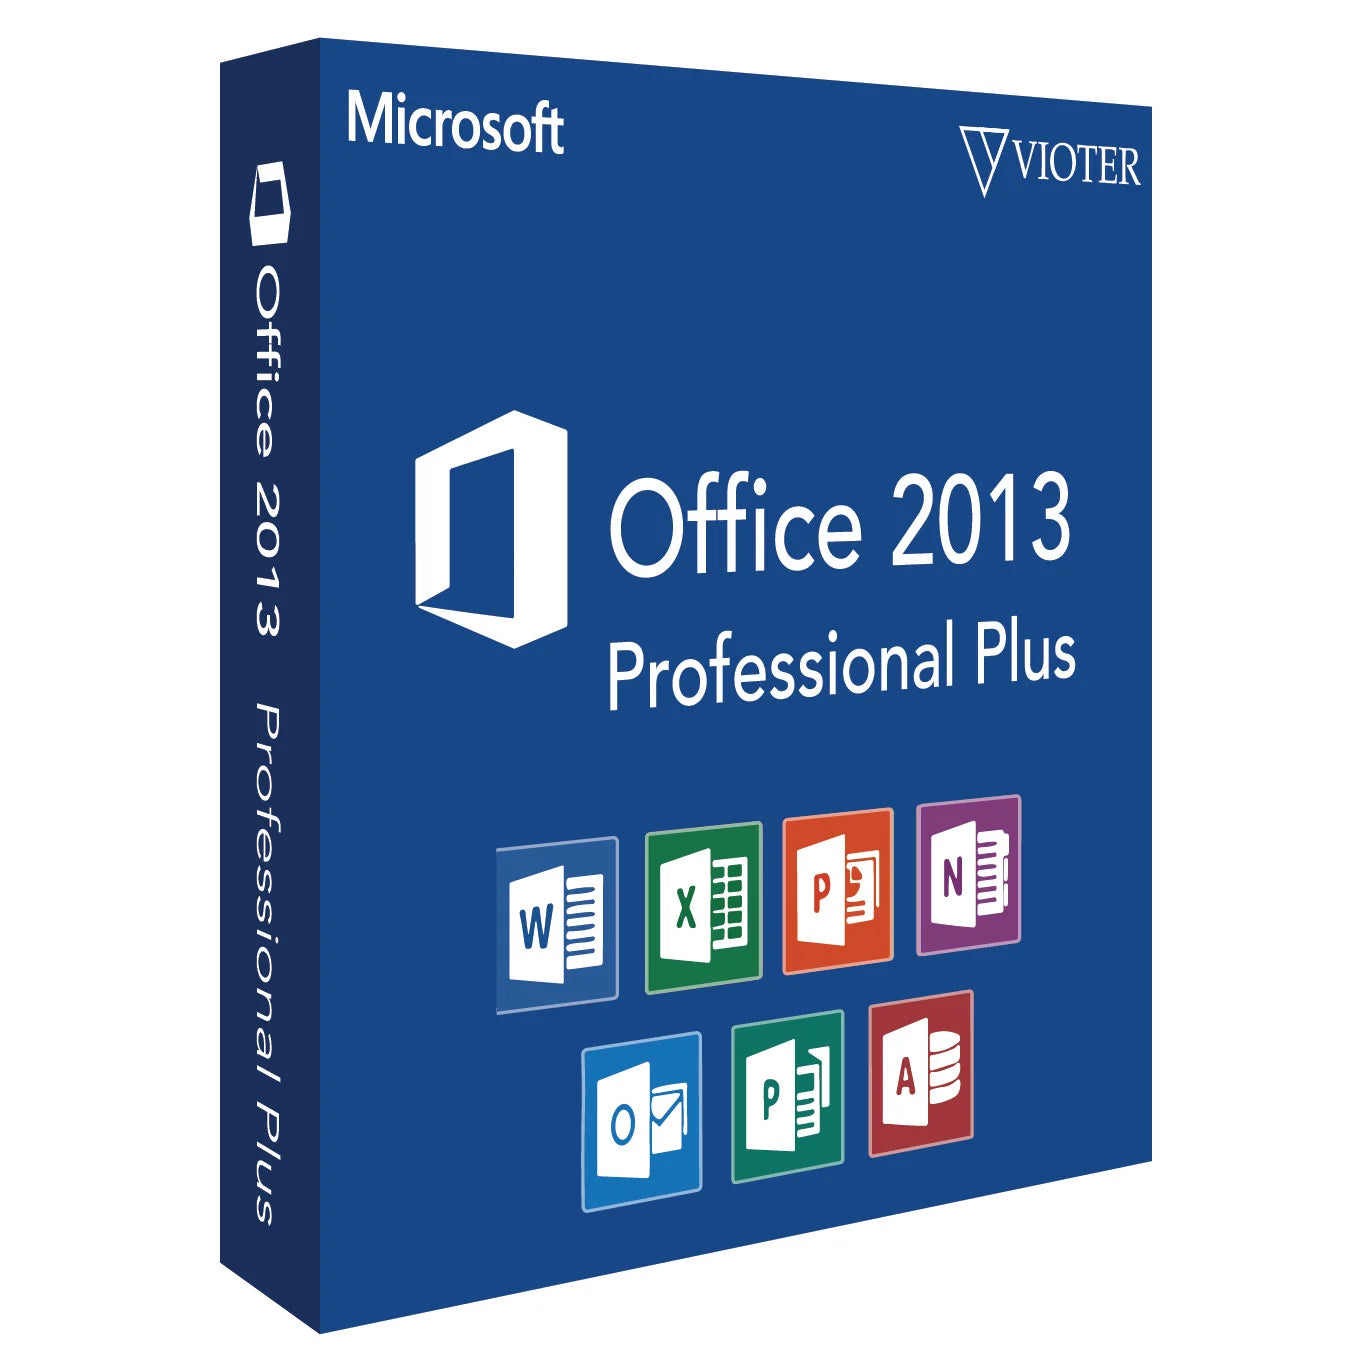 Microsoft Office 2013 Professional Plus - Lifetime Activation